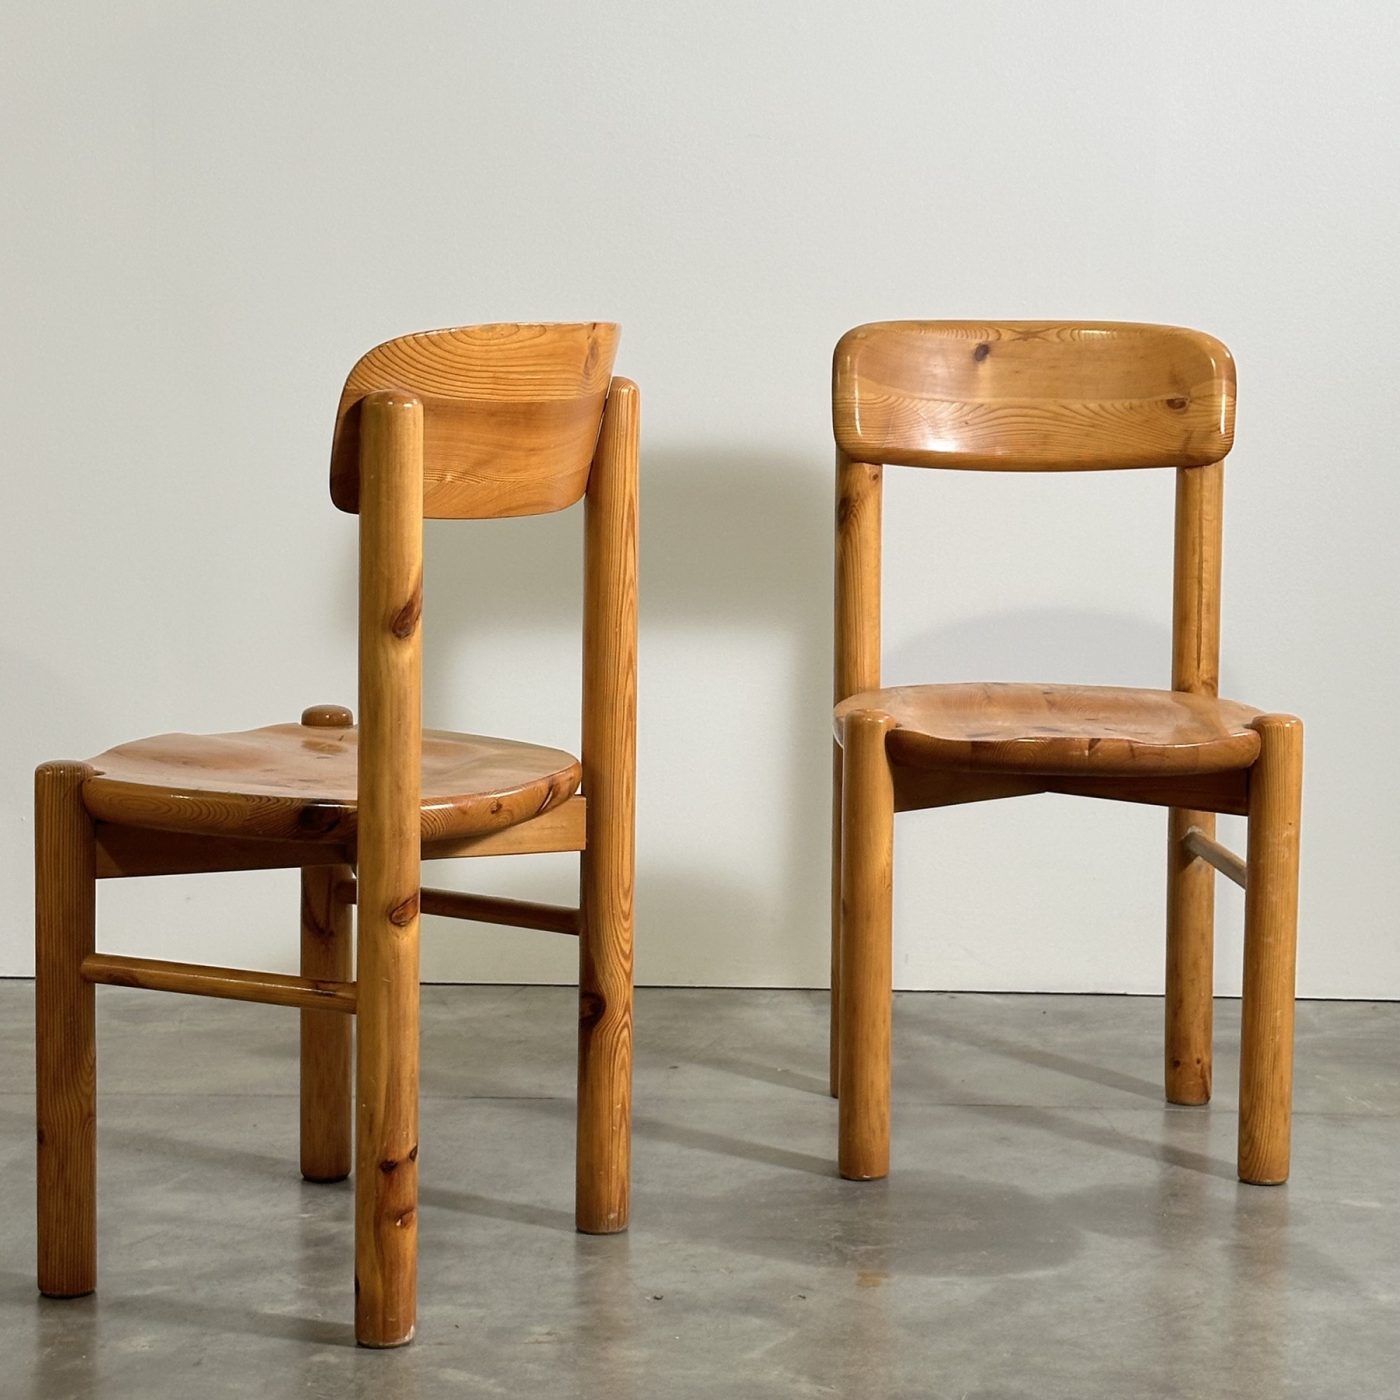 objet-vagabond-pine-chairs0004